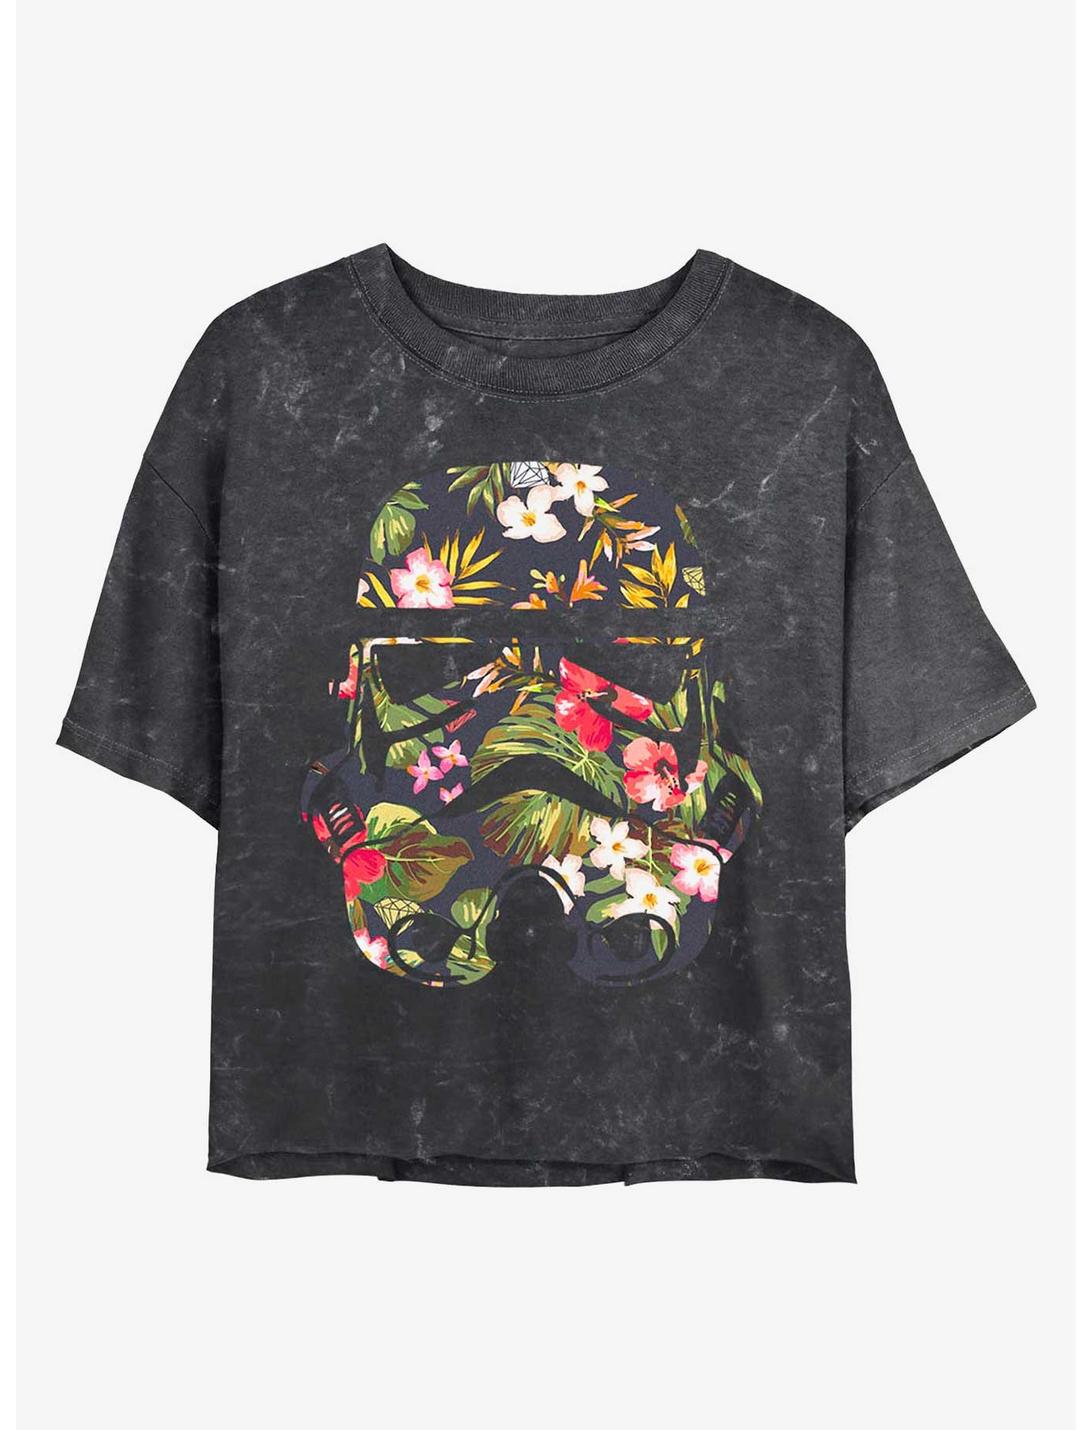 Star Wars Storm Flowers Mineral Wash Crop Womens T-Shirt, BLACK, hi-res